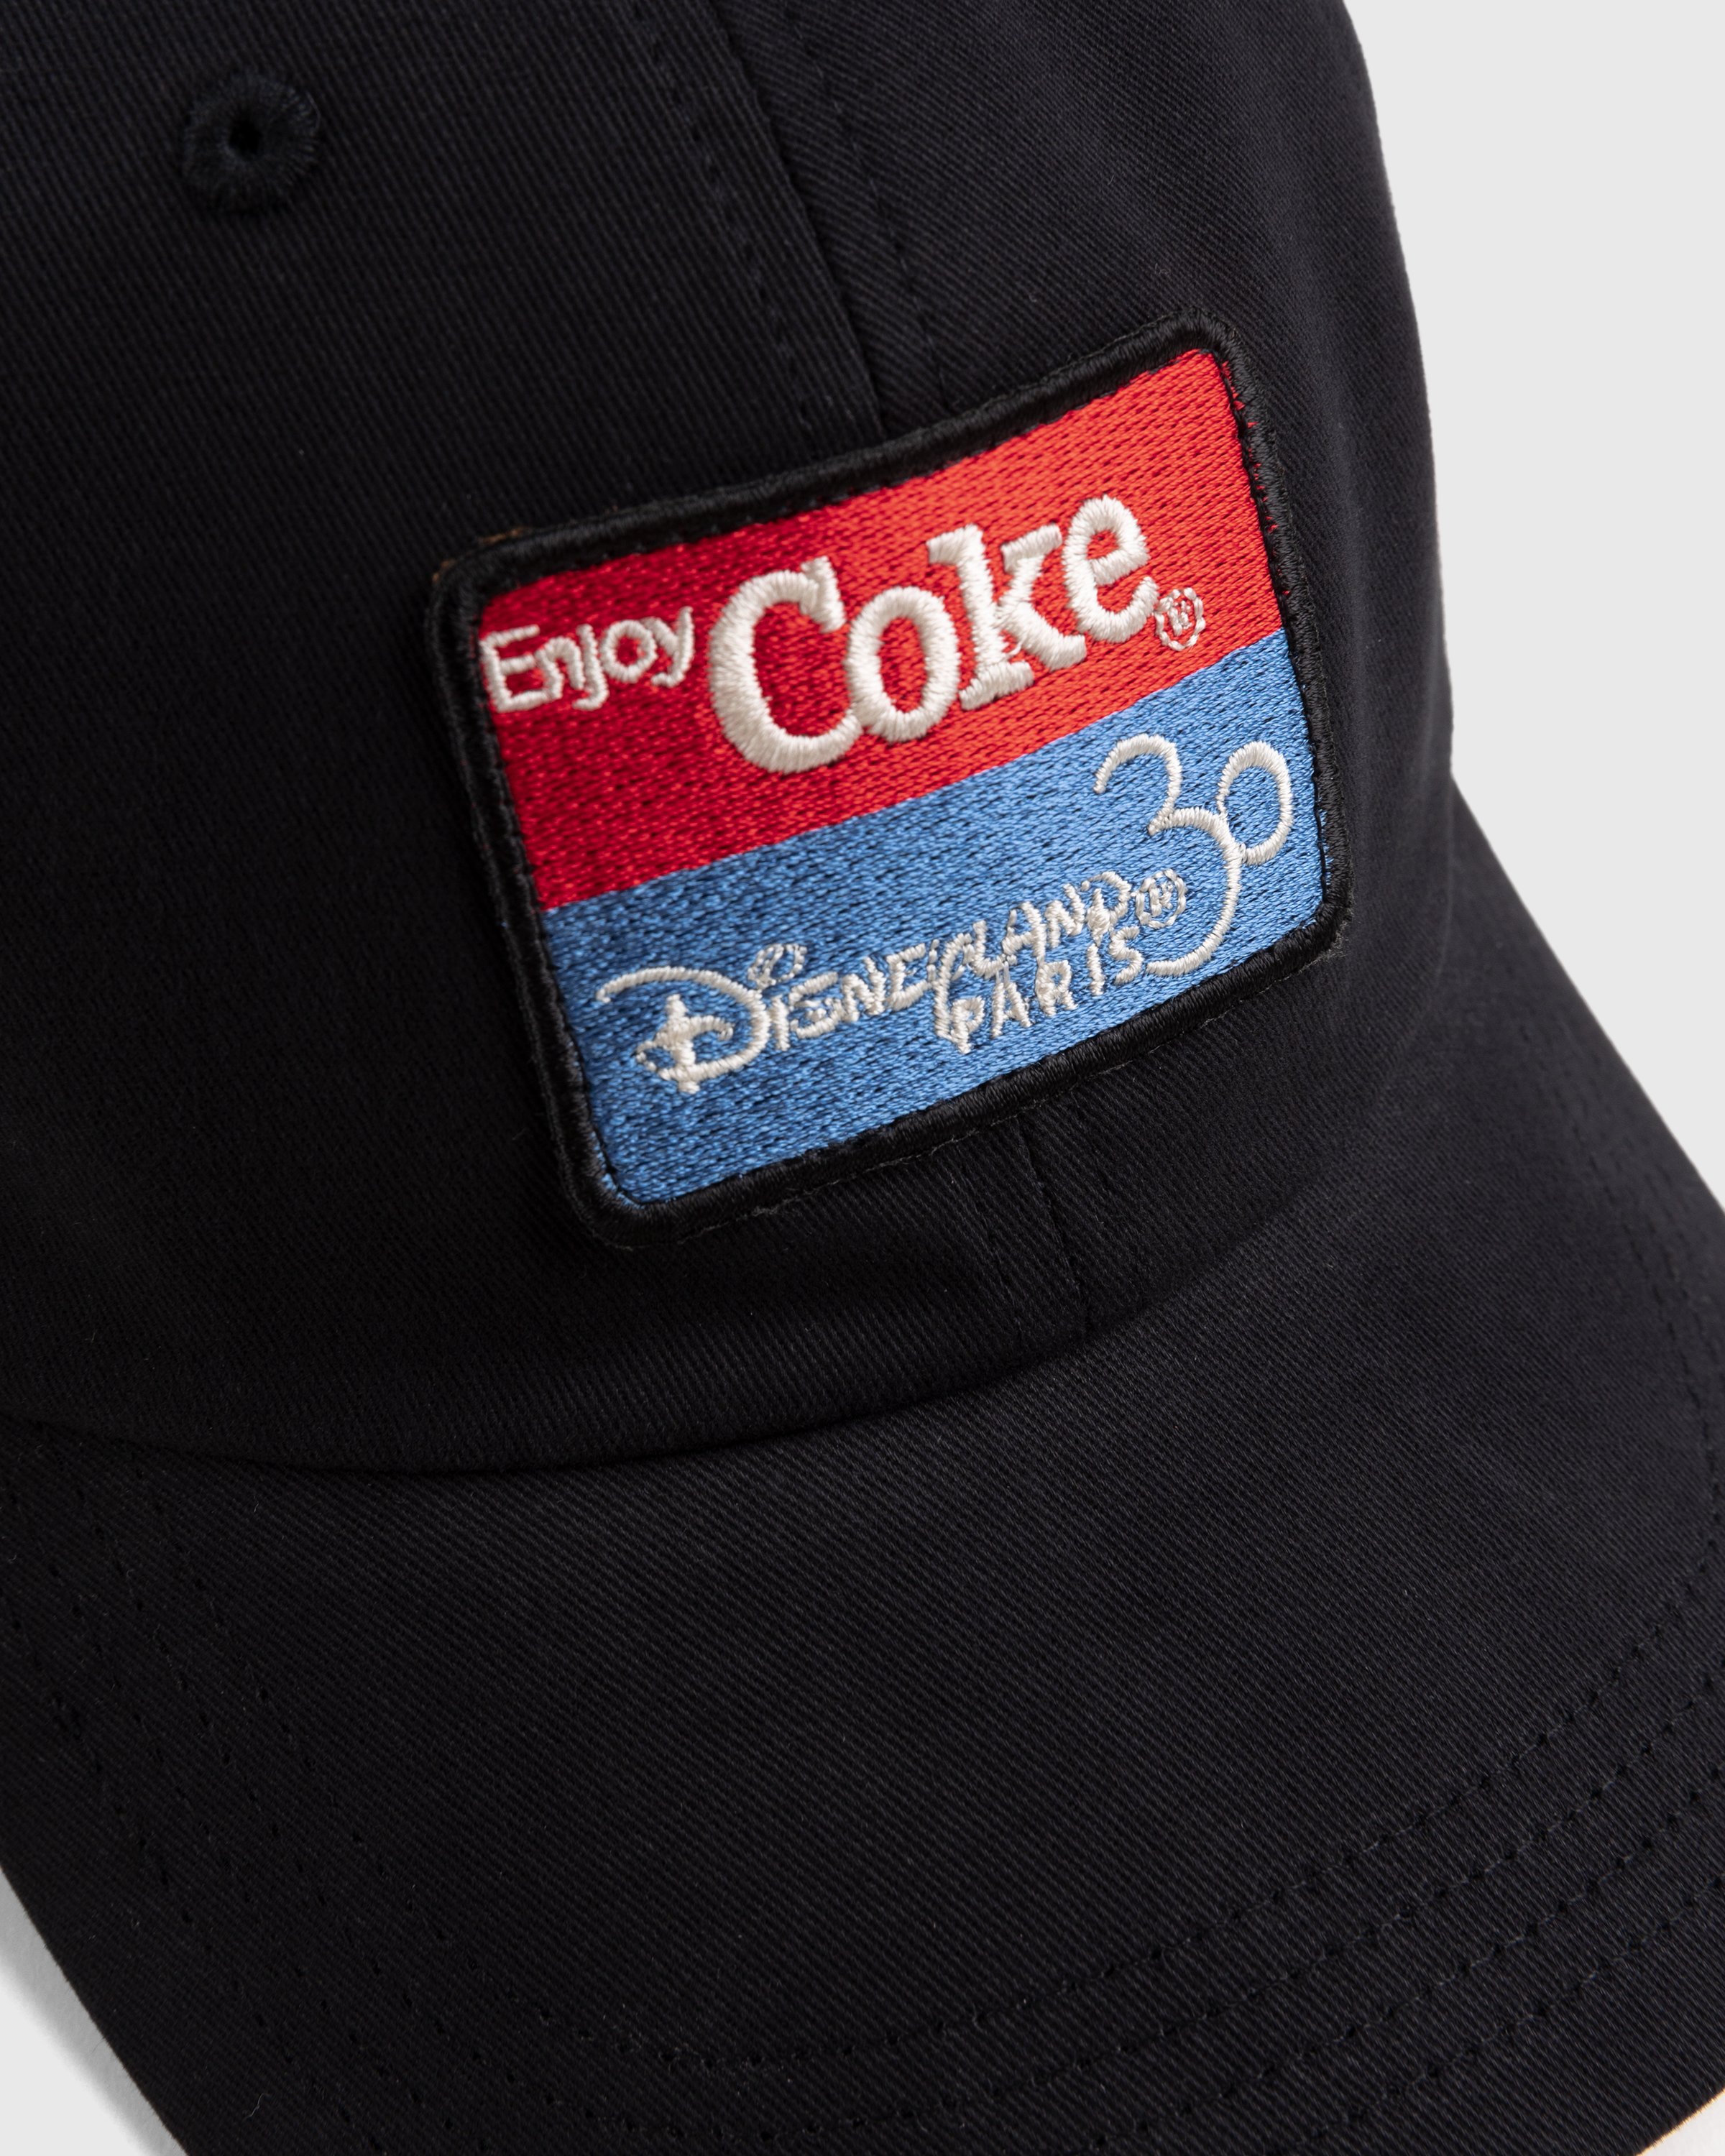 Disneyland Paris x Coca-Cola x Highsnobiety - Not In Paris 4 Logo Baseball Cap Black - Accessories - Black - Image 8